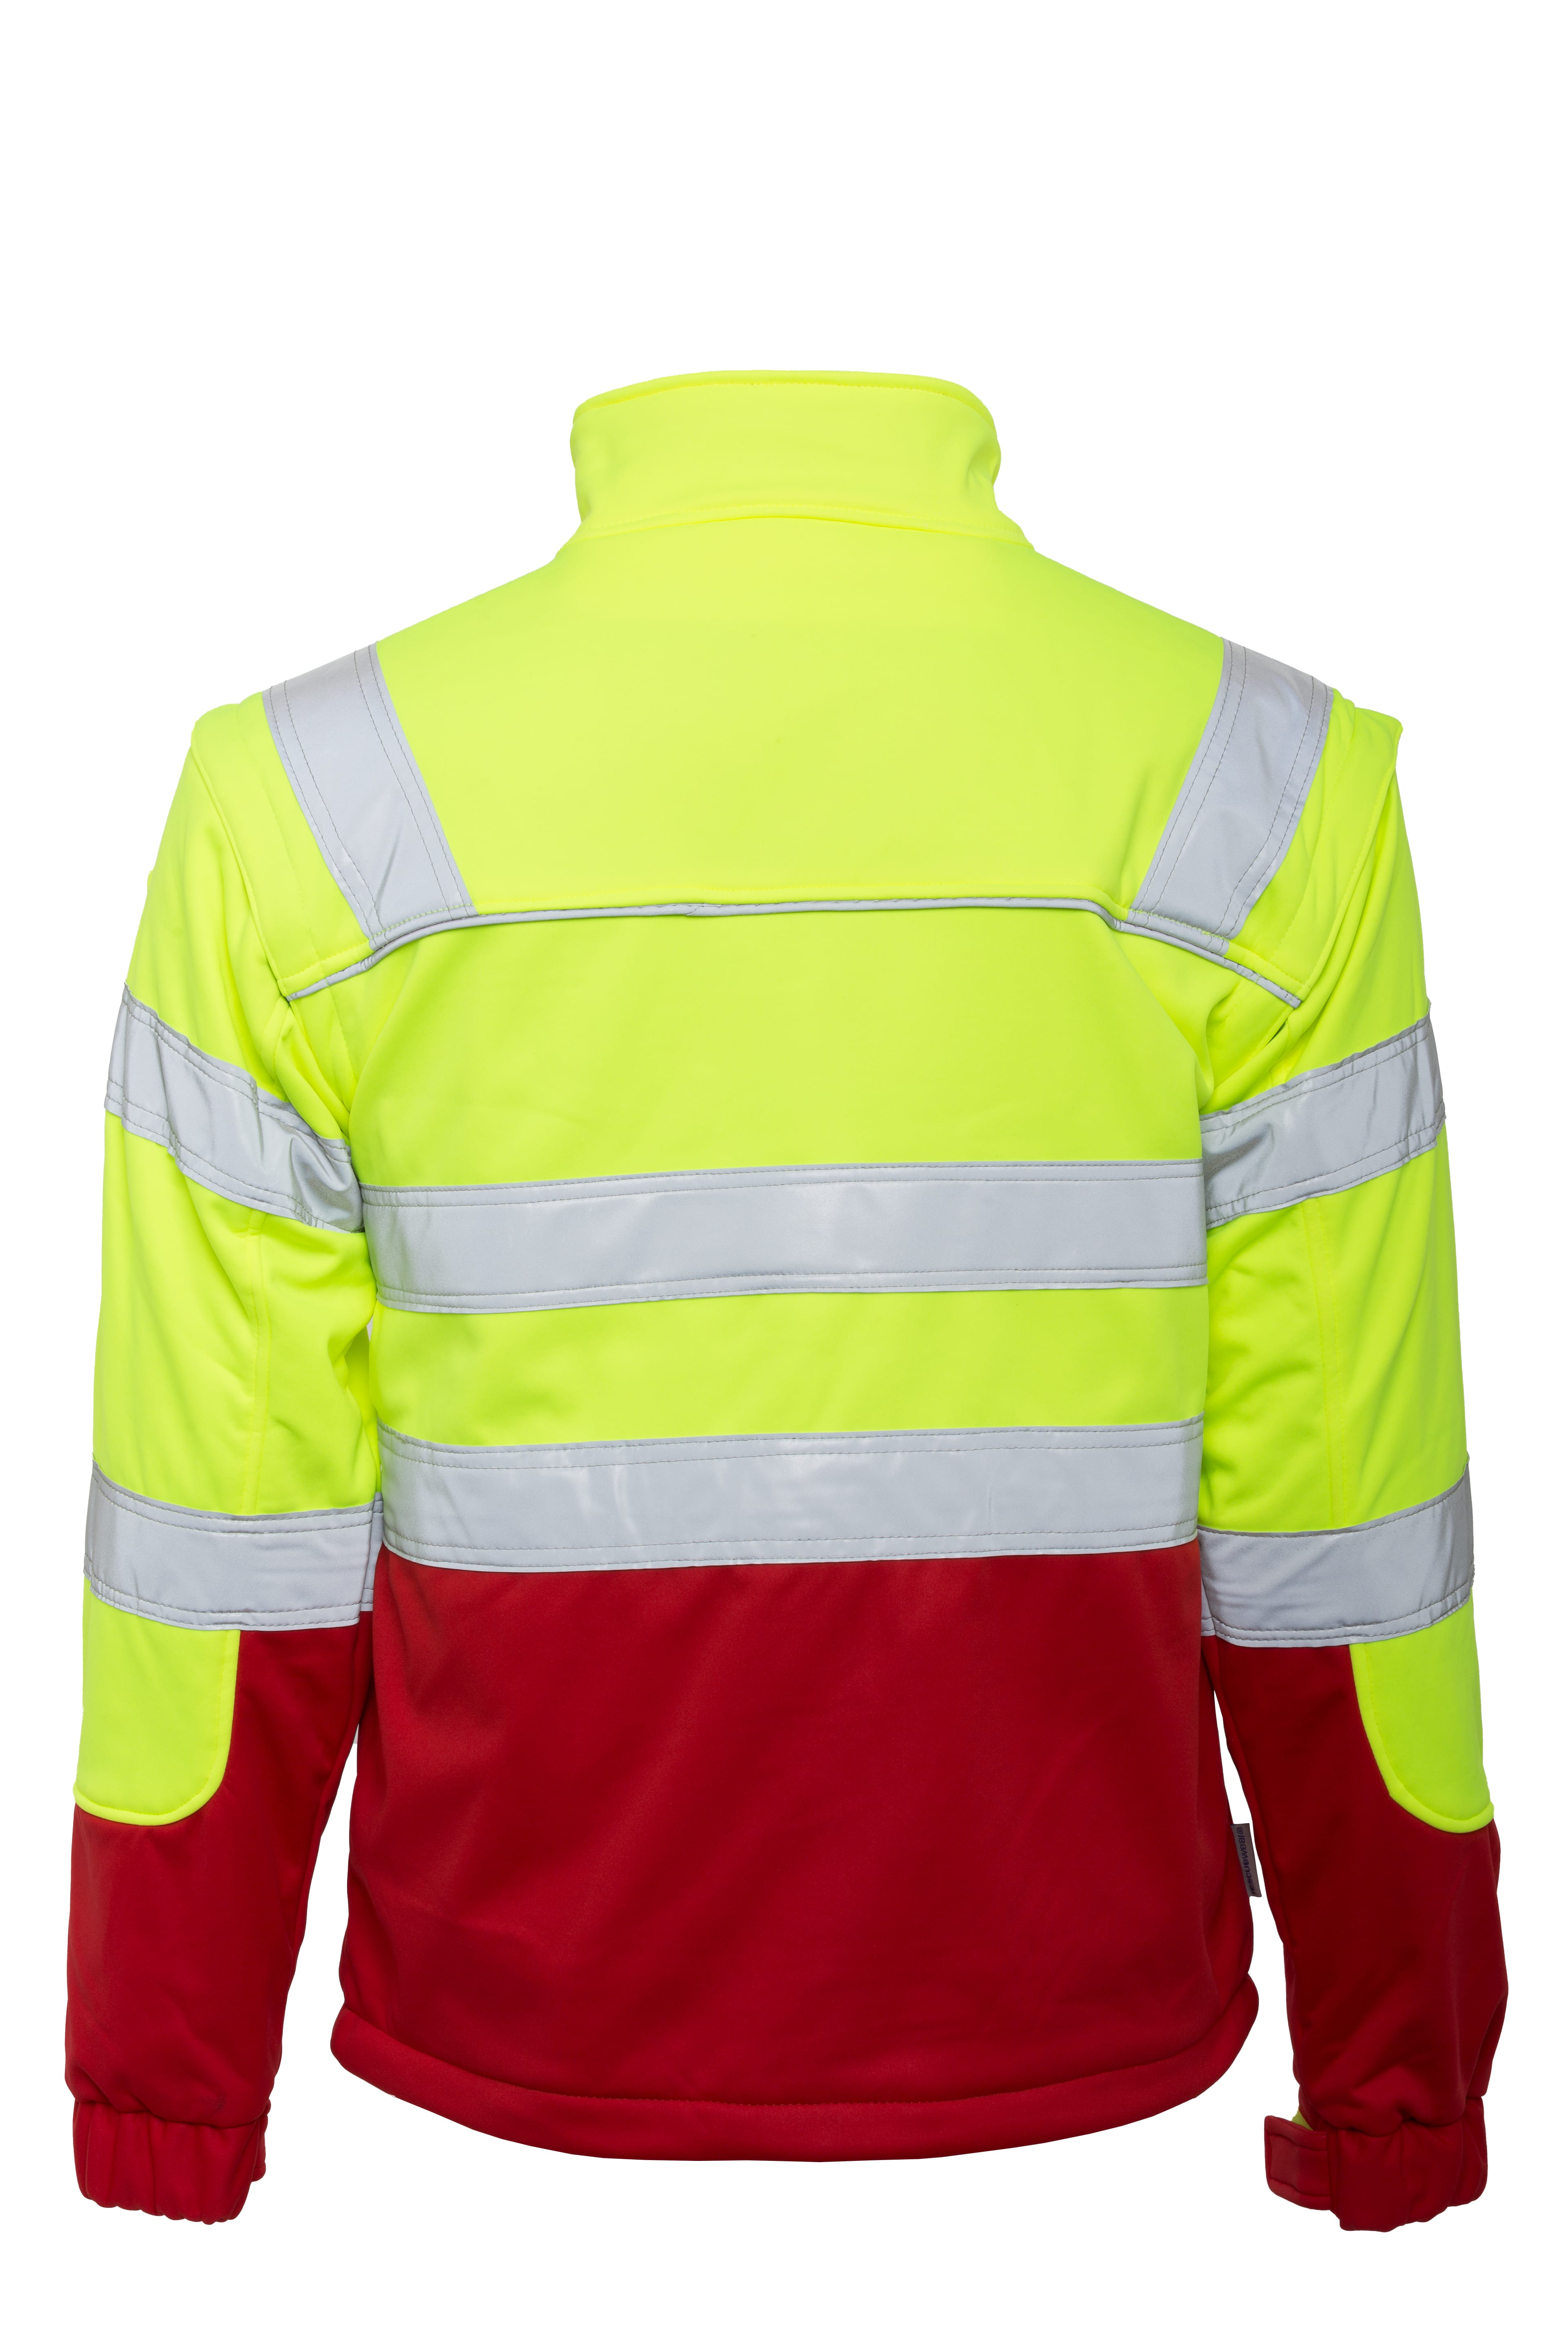 Rescuewear Softshelljacke HiVis Klasse 3 Rot / Neon Gelb - S